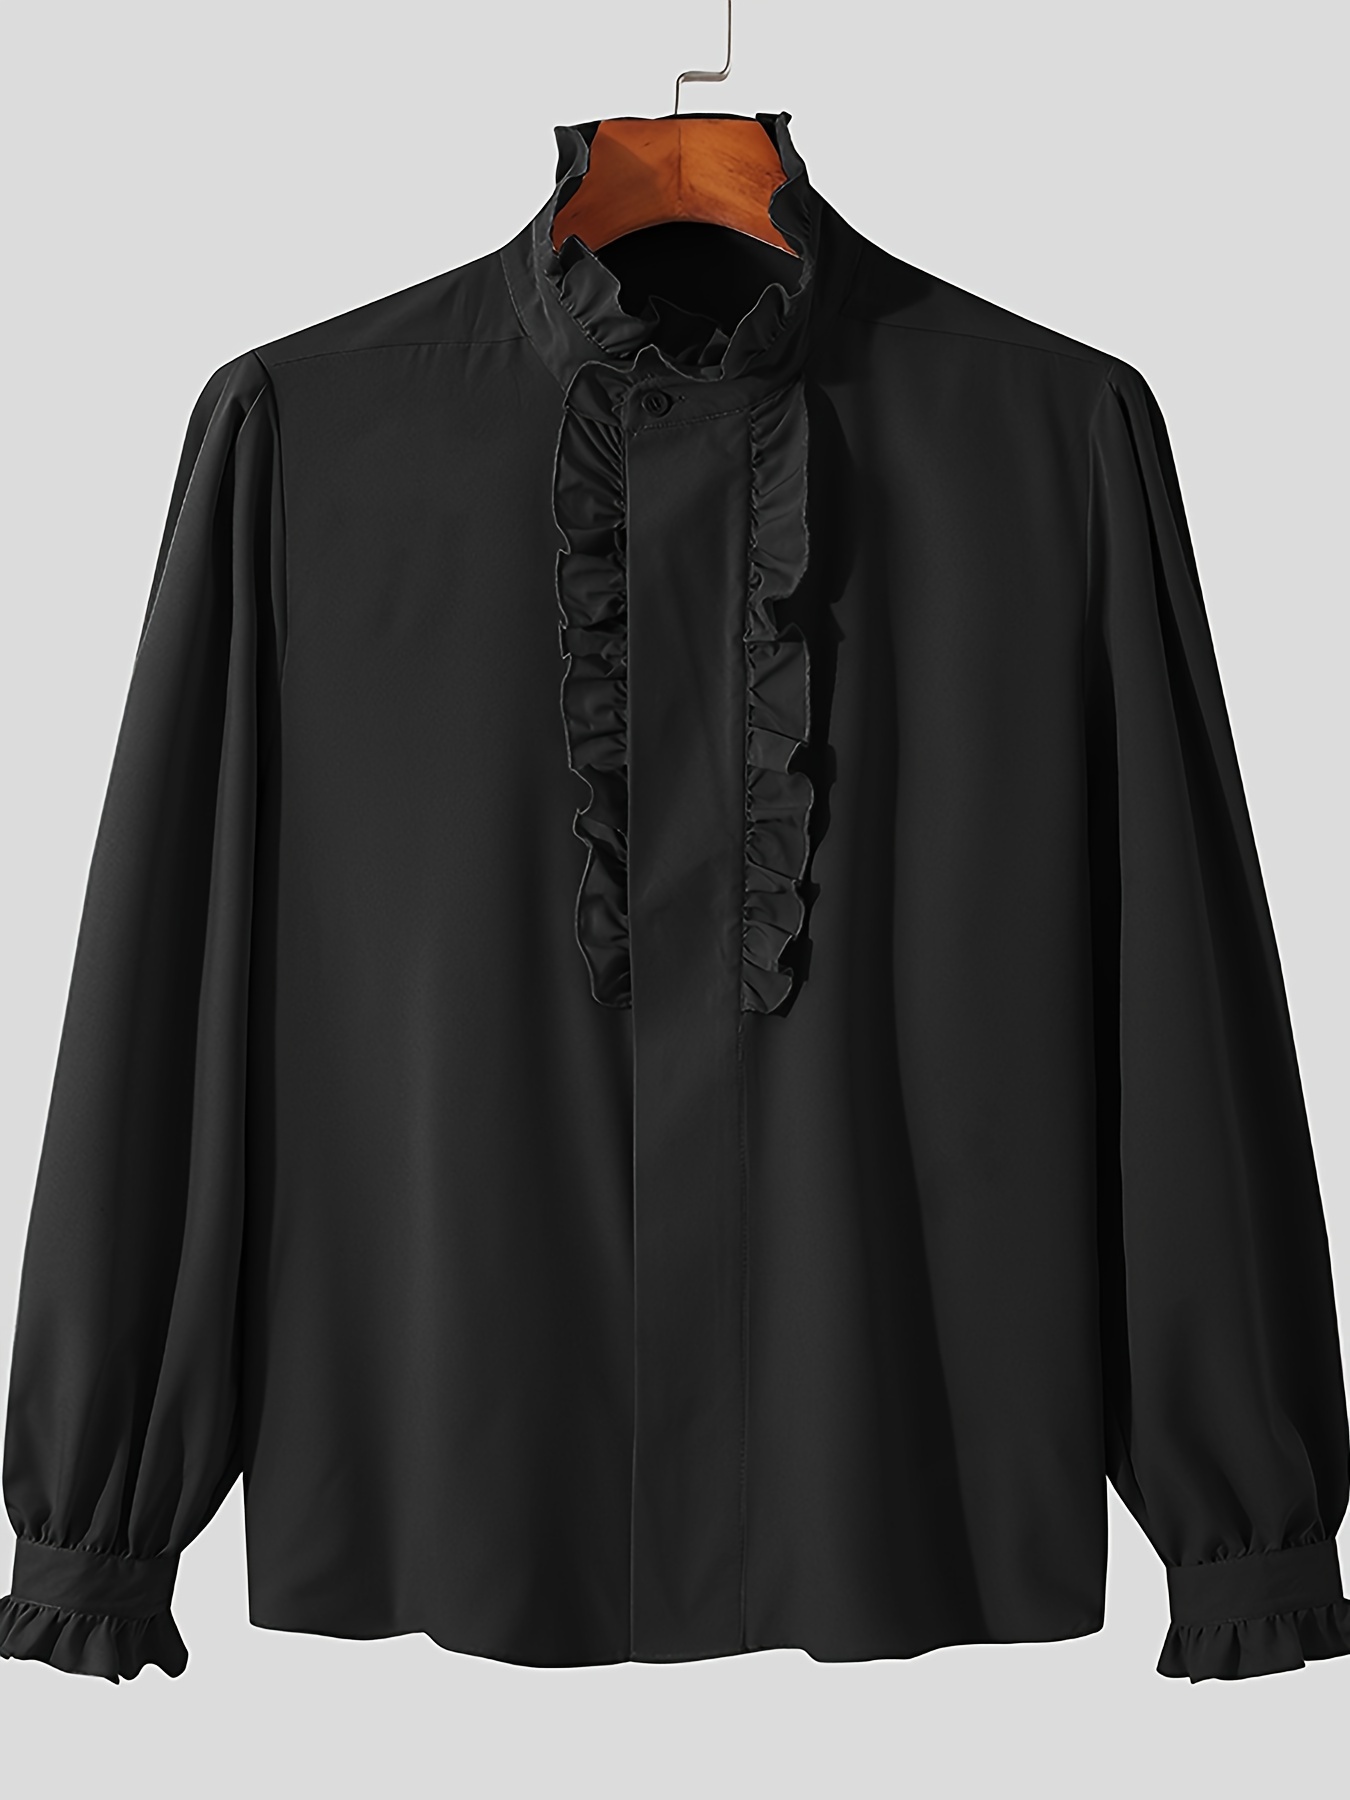 Men Gothic Shirt Top Victorian Ruffle Neck Cotton Punk Casual Vintage